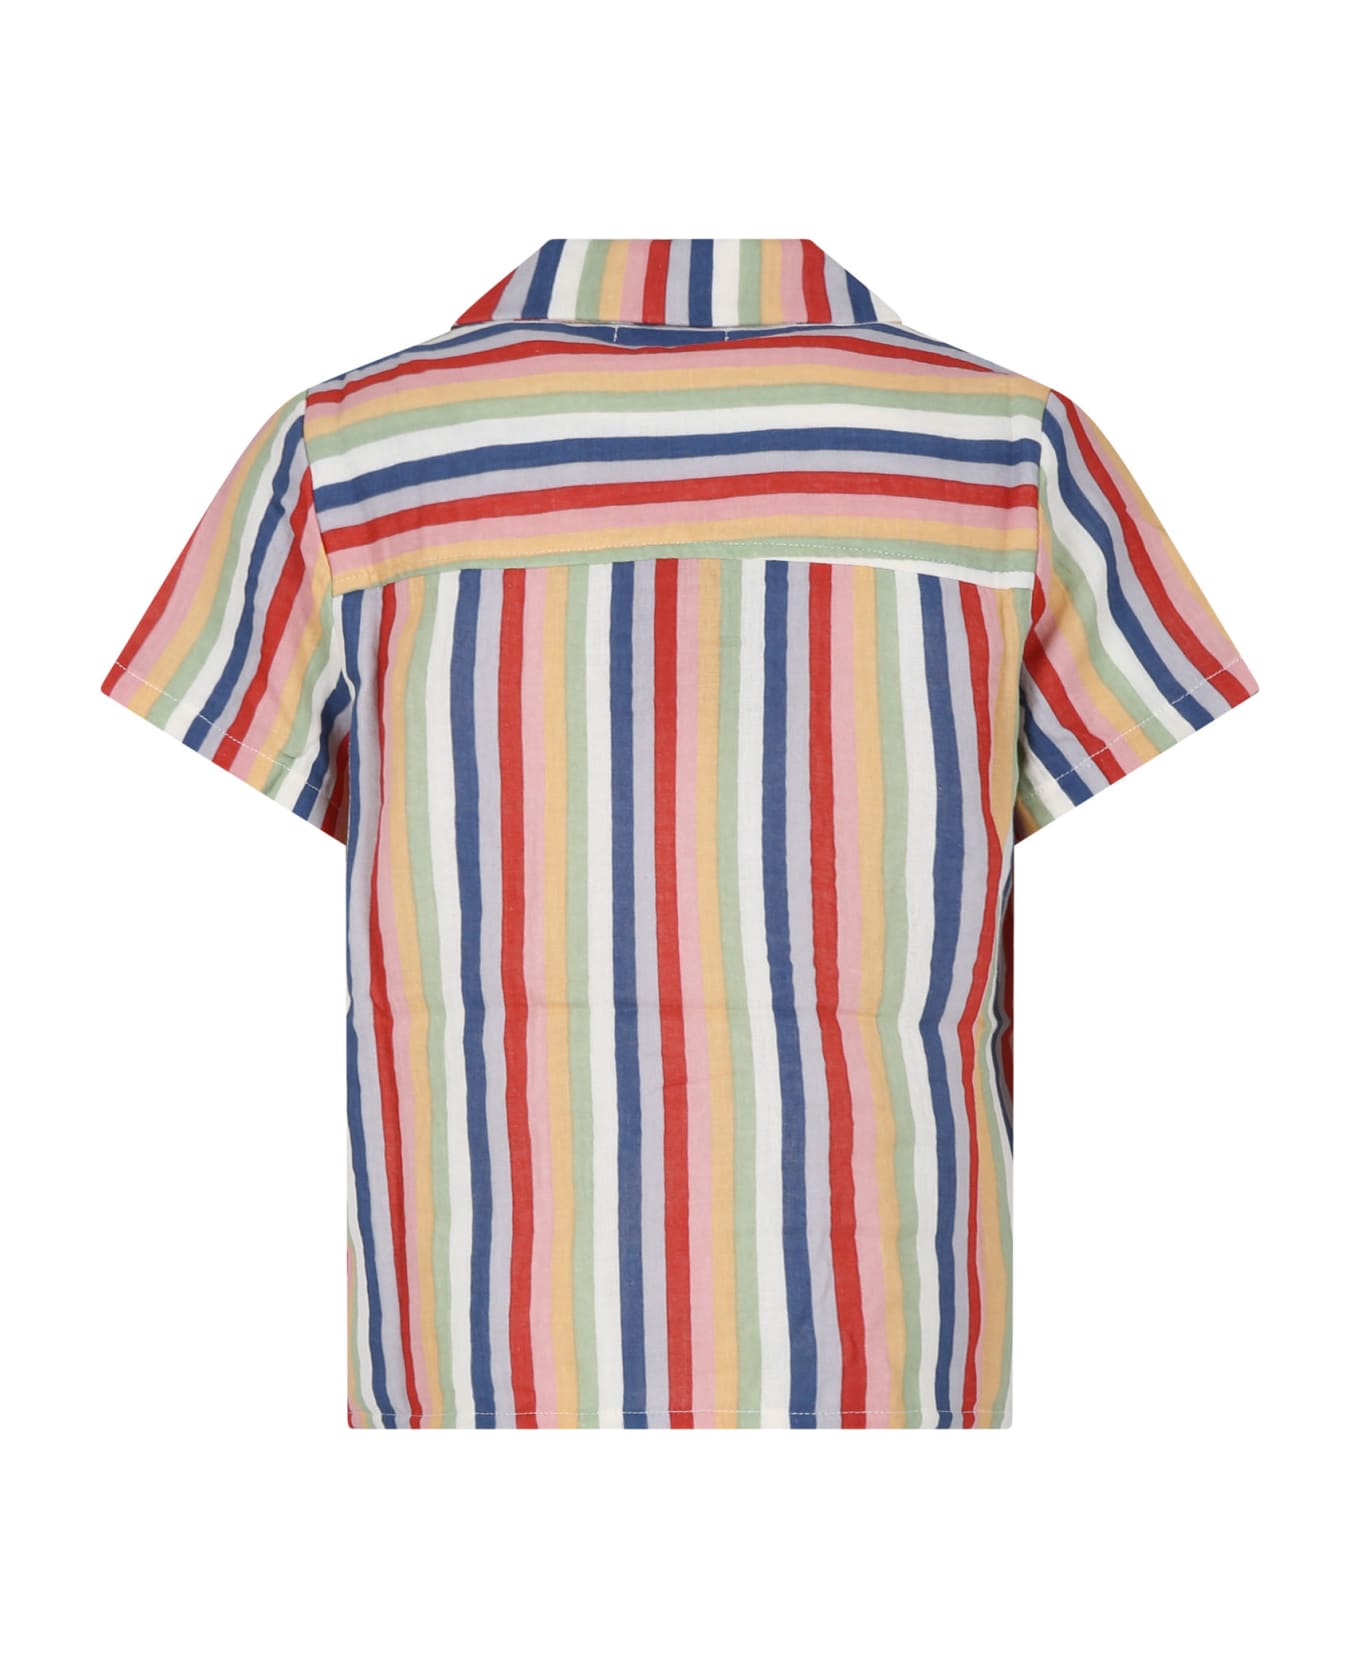 Coco Au Lait Multicolor Shirt For Kids With Stripes Pattern - Multicolor